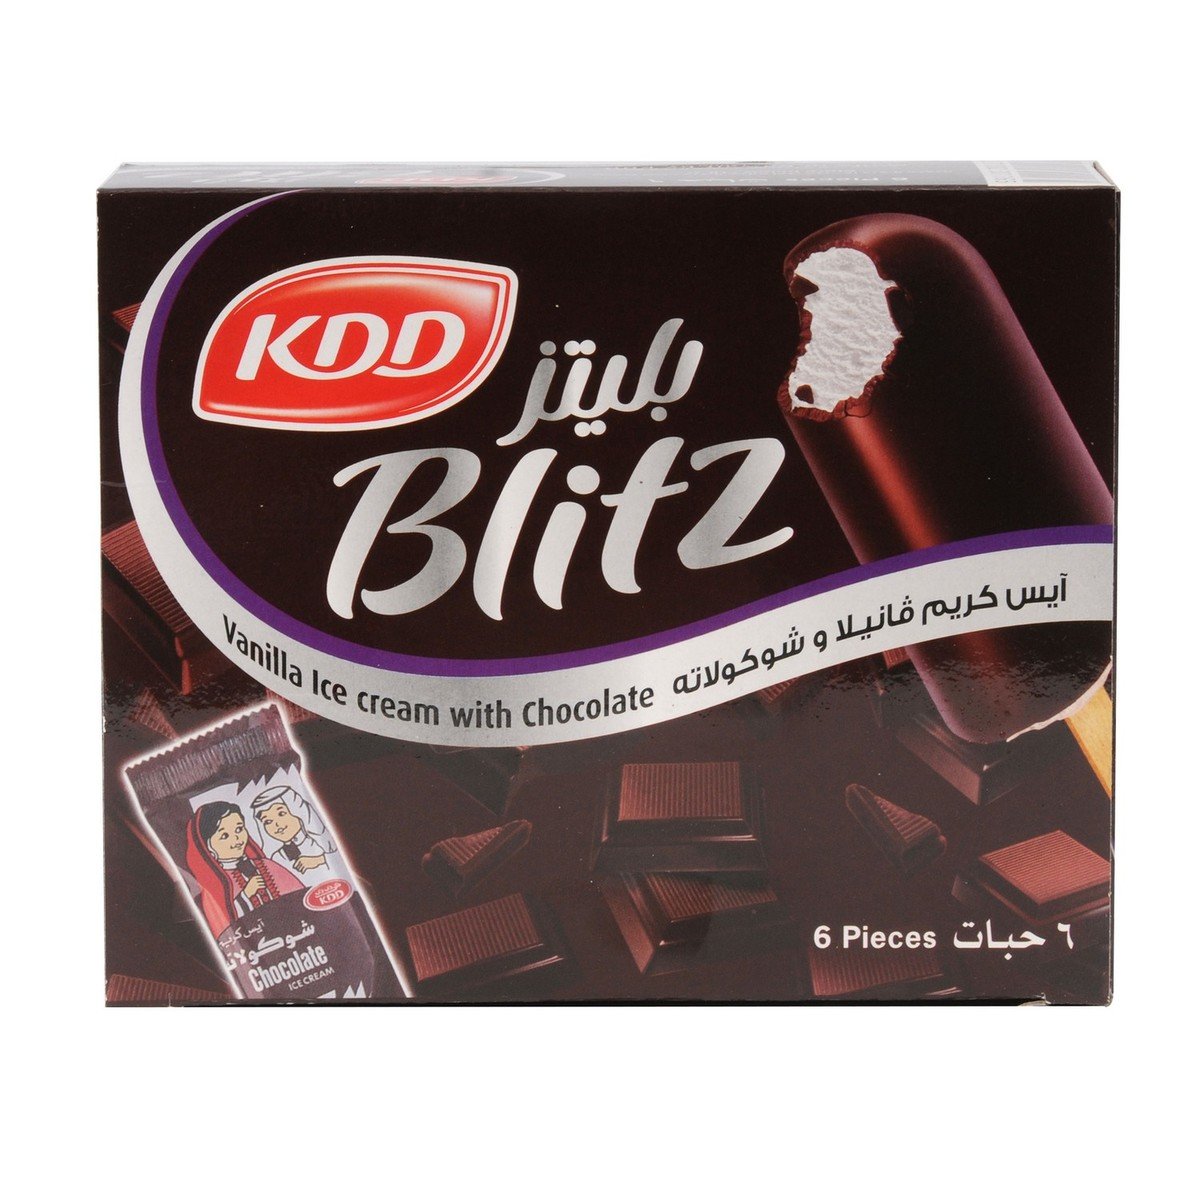 KDD Blitz Vanilla with Chocolate Ice Cream Stick 62ml x 6 Pieces